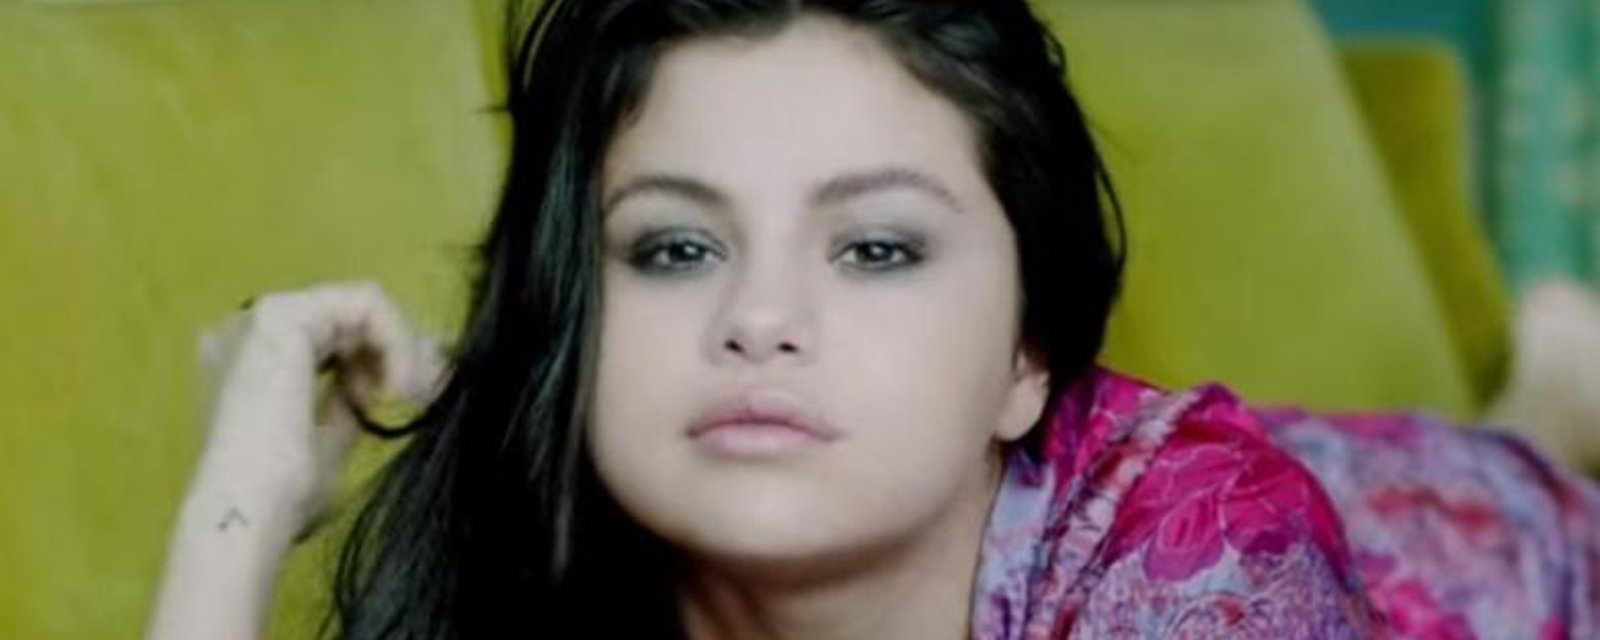 Selena Gomez fait une annonce importante qui va causer une grosse onde de choc...